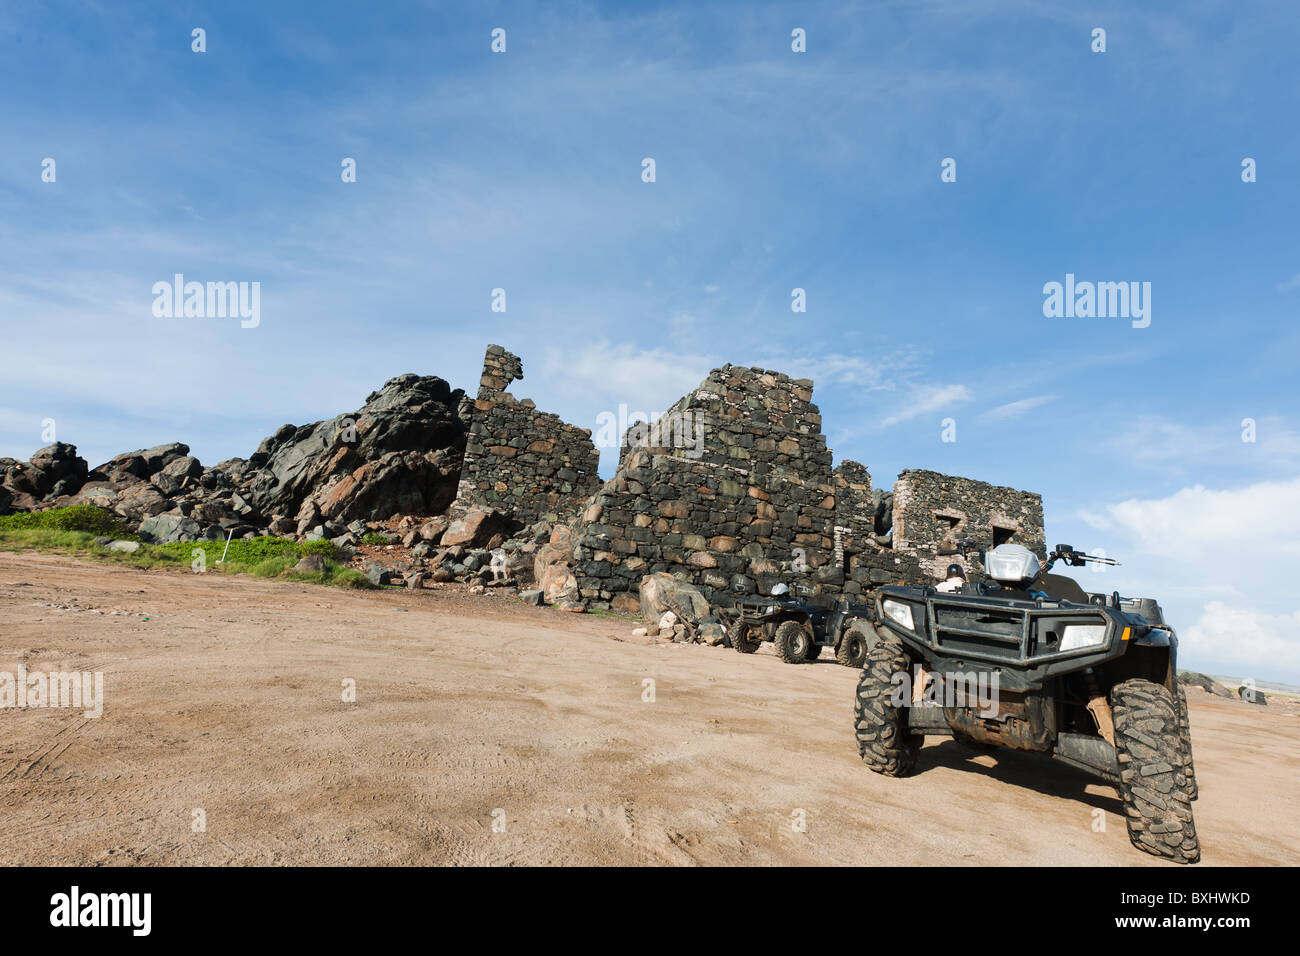 Off-Road vehicles on dirt road in Aruba north coast area Stock Photo